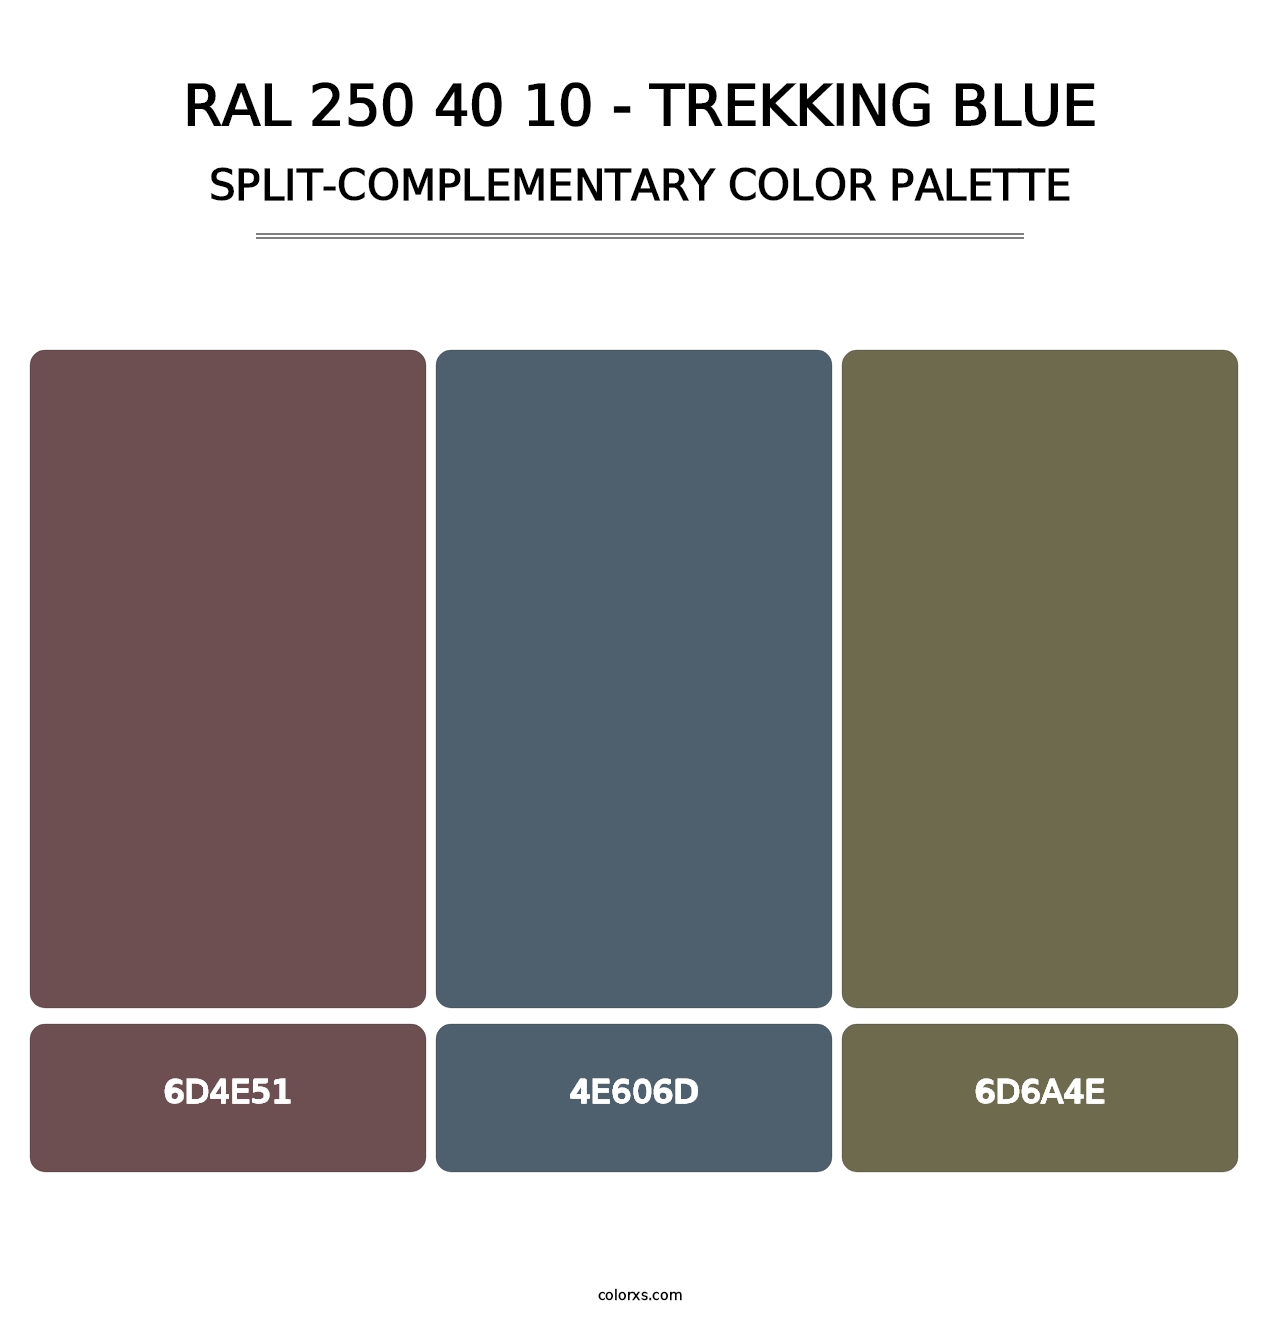 RAL 250 40 10 - Trekking Blue - Split-Complementary Color Palette